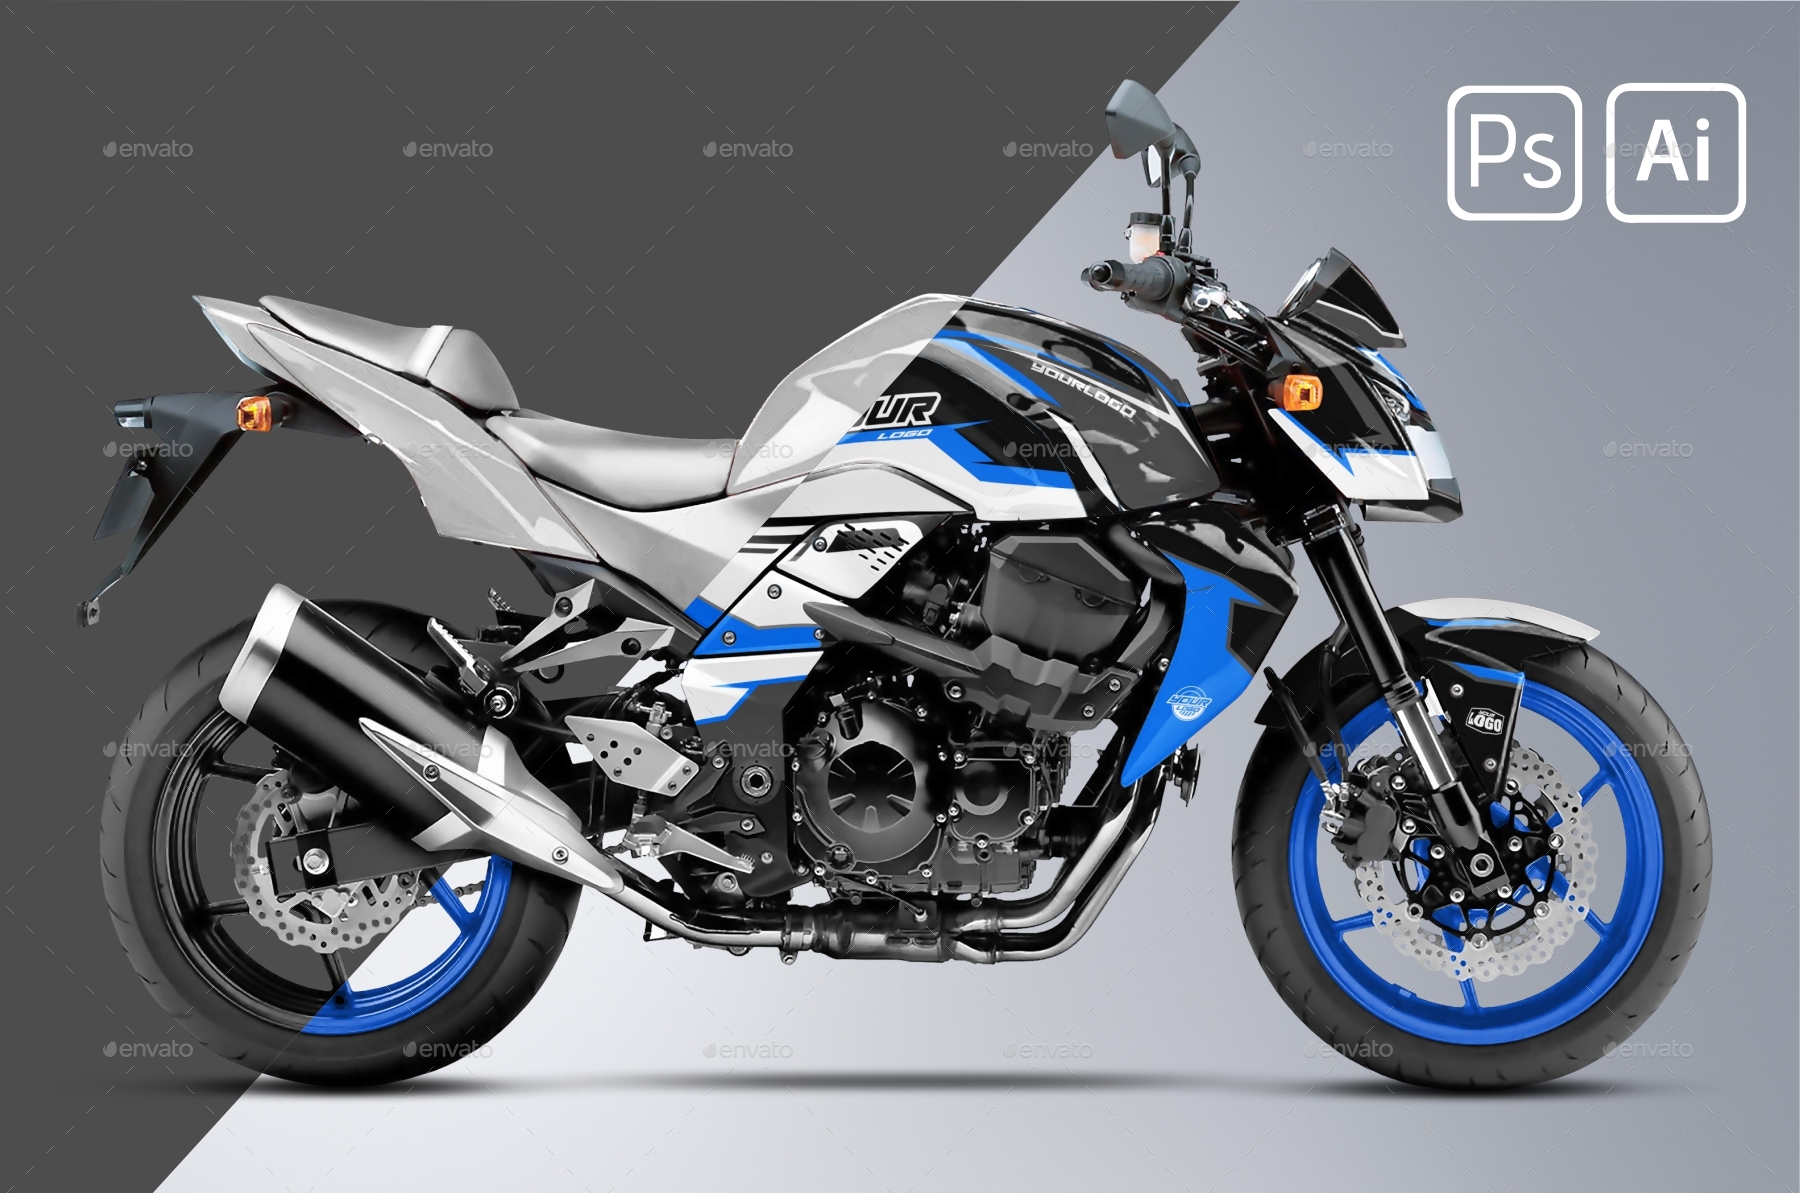 Kawasaki Z750 Projects :: Photos, videos, logos, illustrations and branding  :: Behance